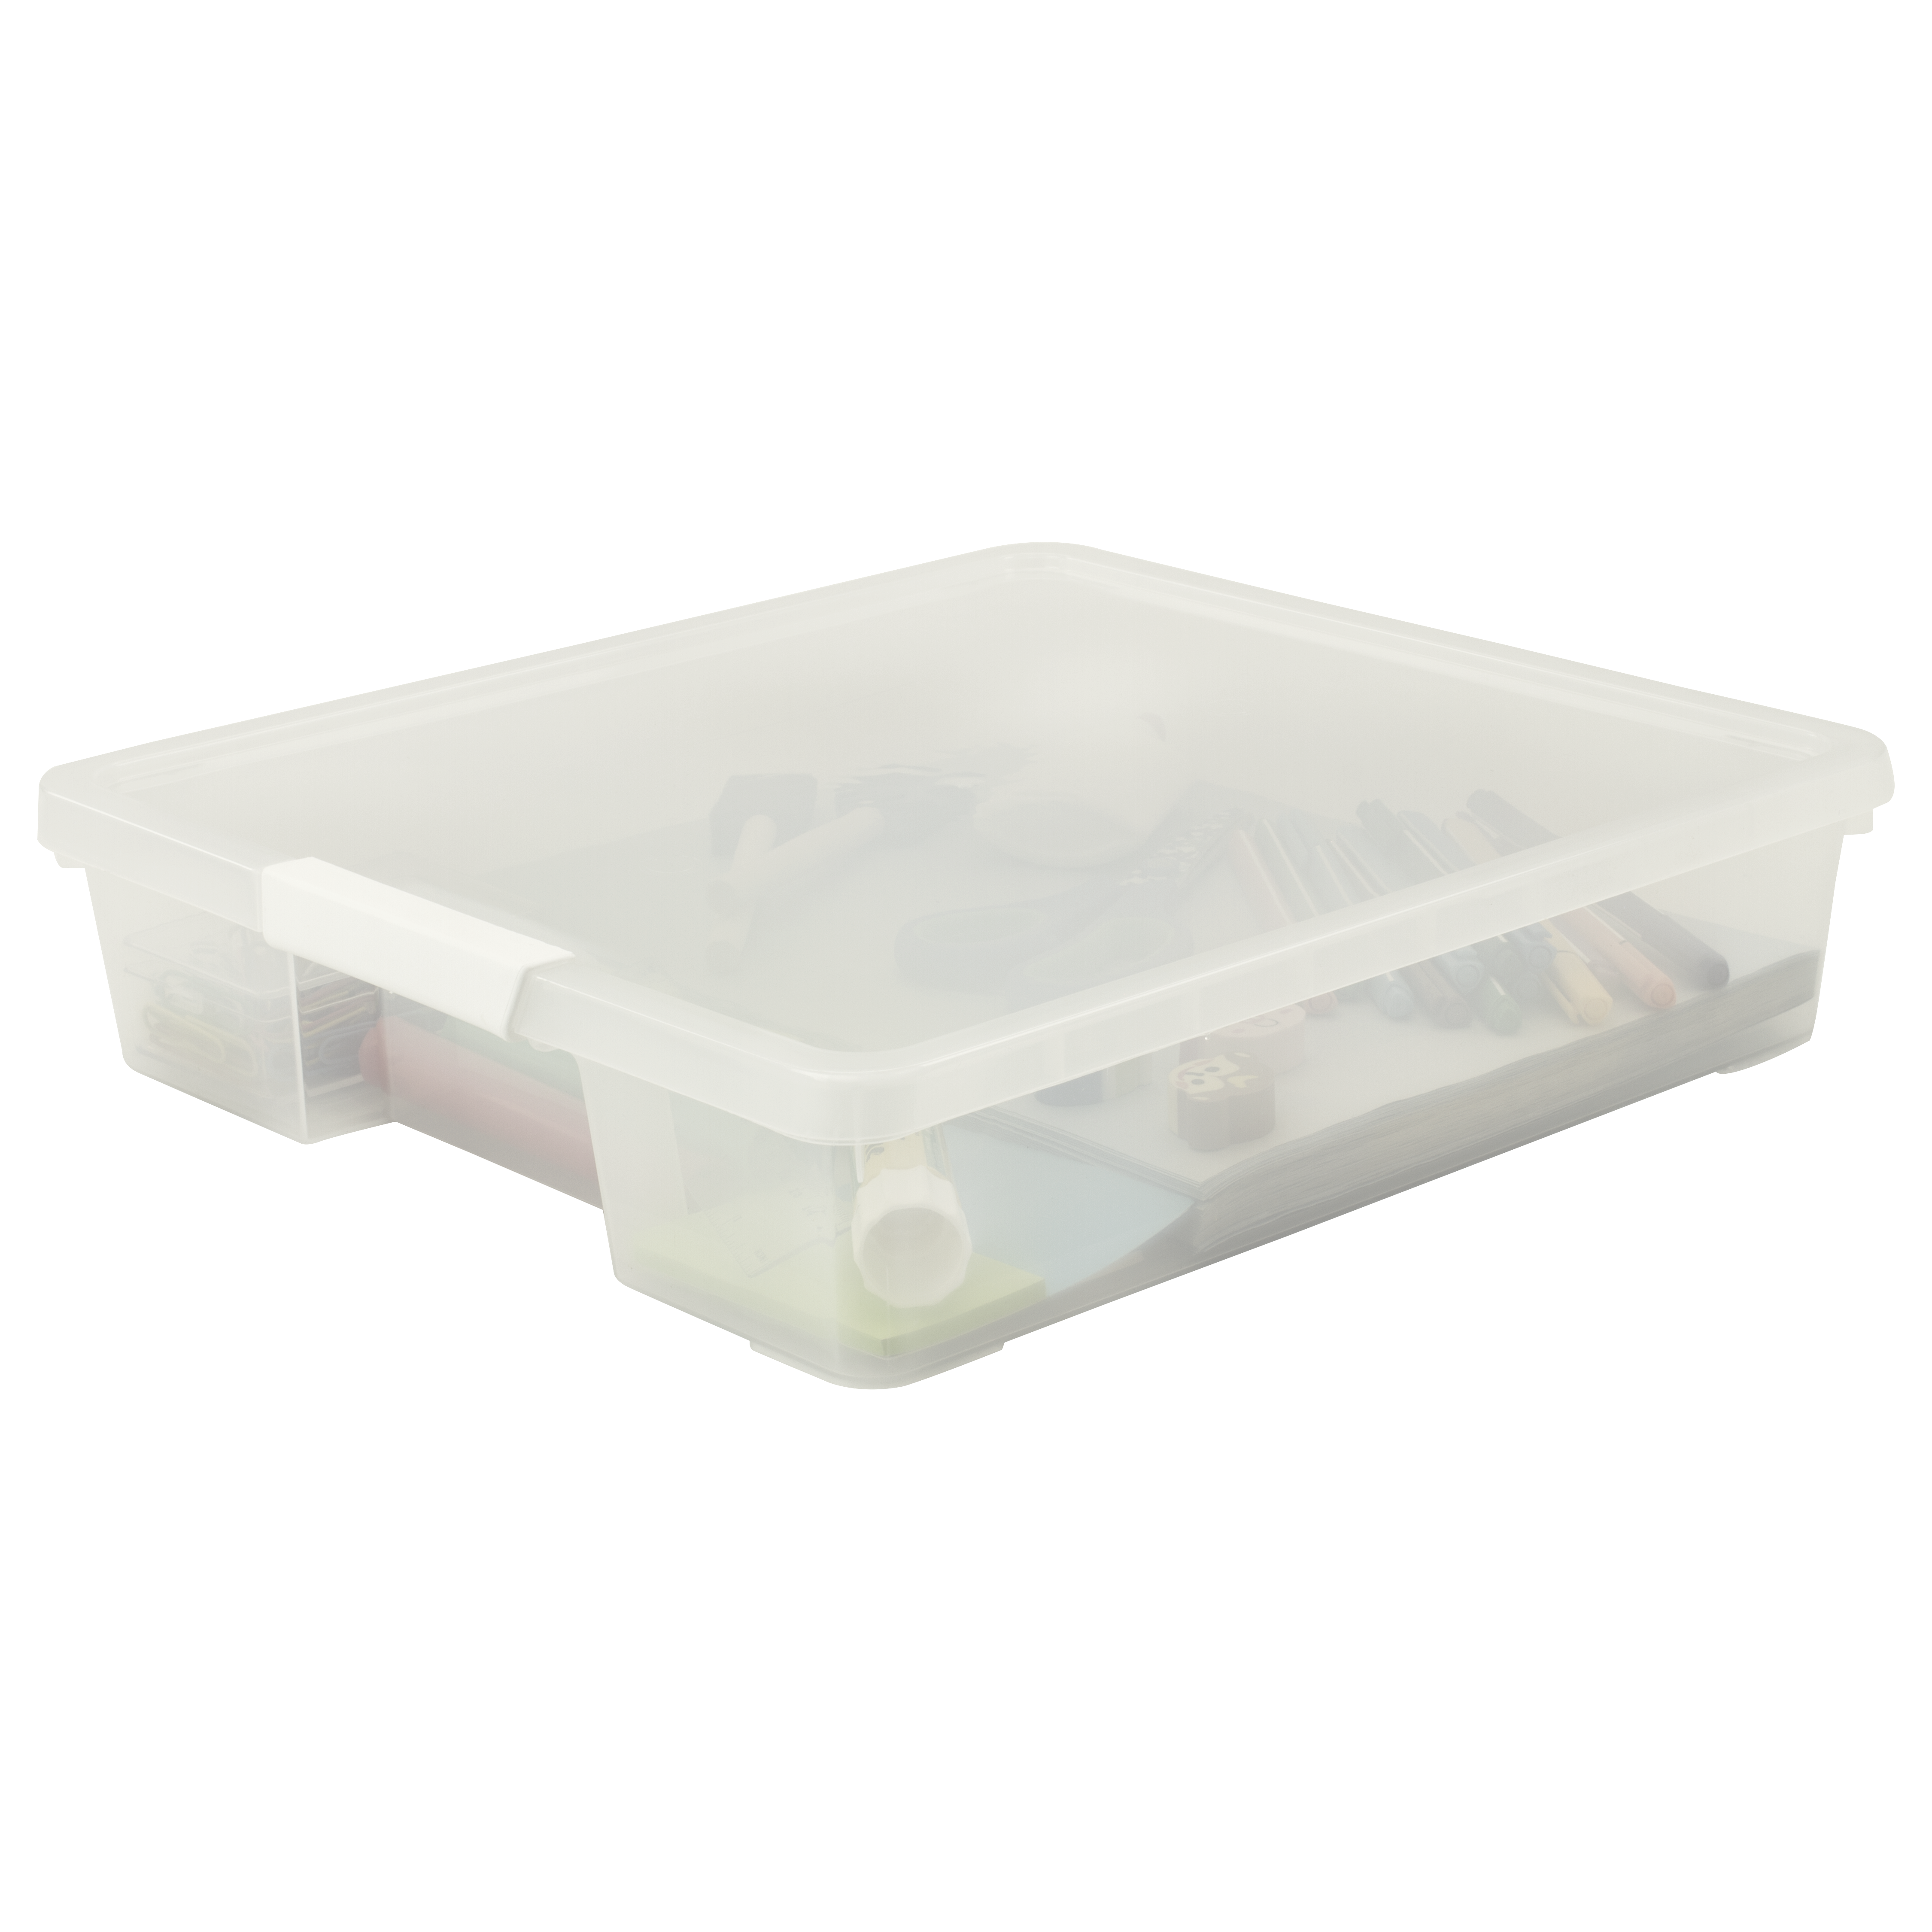 Storex Classroom Craft Project Box – Stacking Plastic Organizer Fits 12x12  Scrapbooking Paper, Purple, 5-Pack (63206U05C)